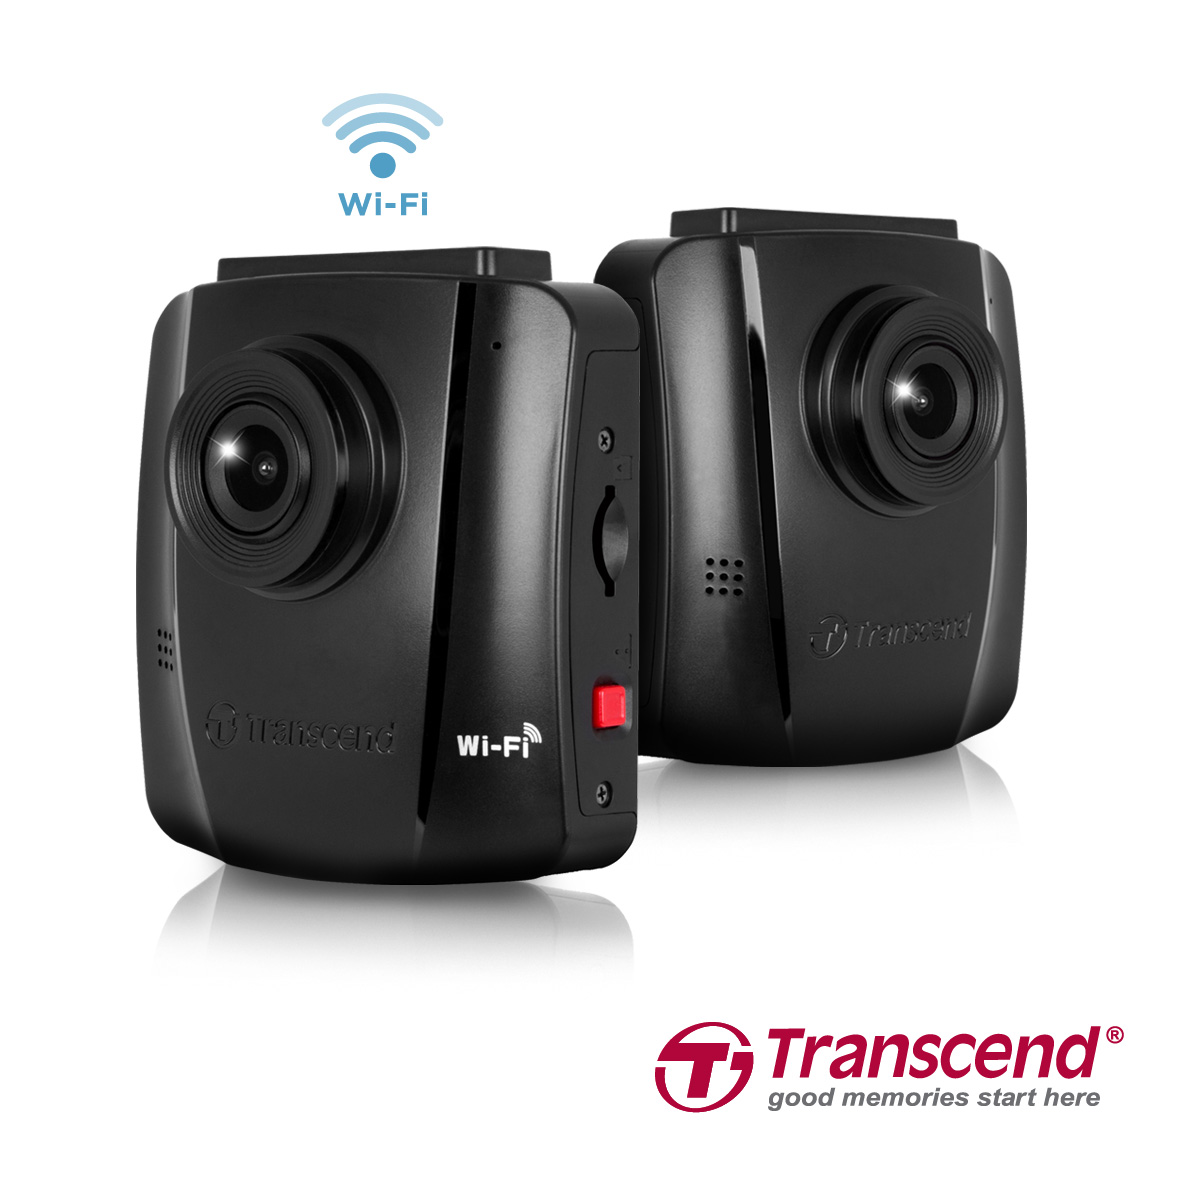 Transcend เปิดตัวกล้องติดรถยนต์ DrivePro 130 และ DrivePro 110 ยกระดับความปลอดภัยในการเดินทางบนท้องถนน  